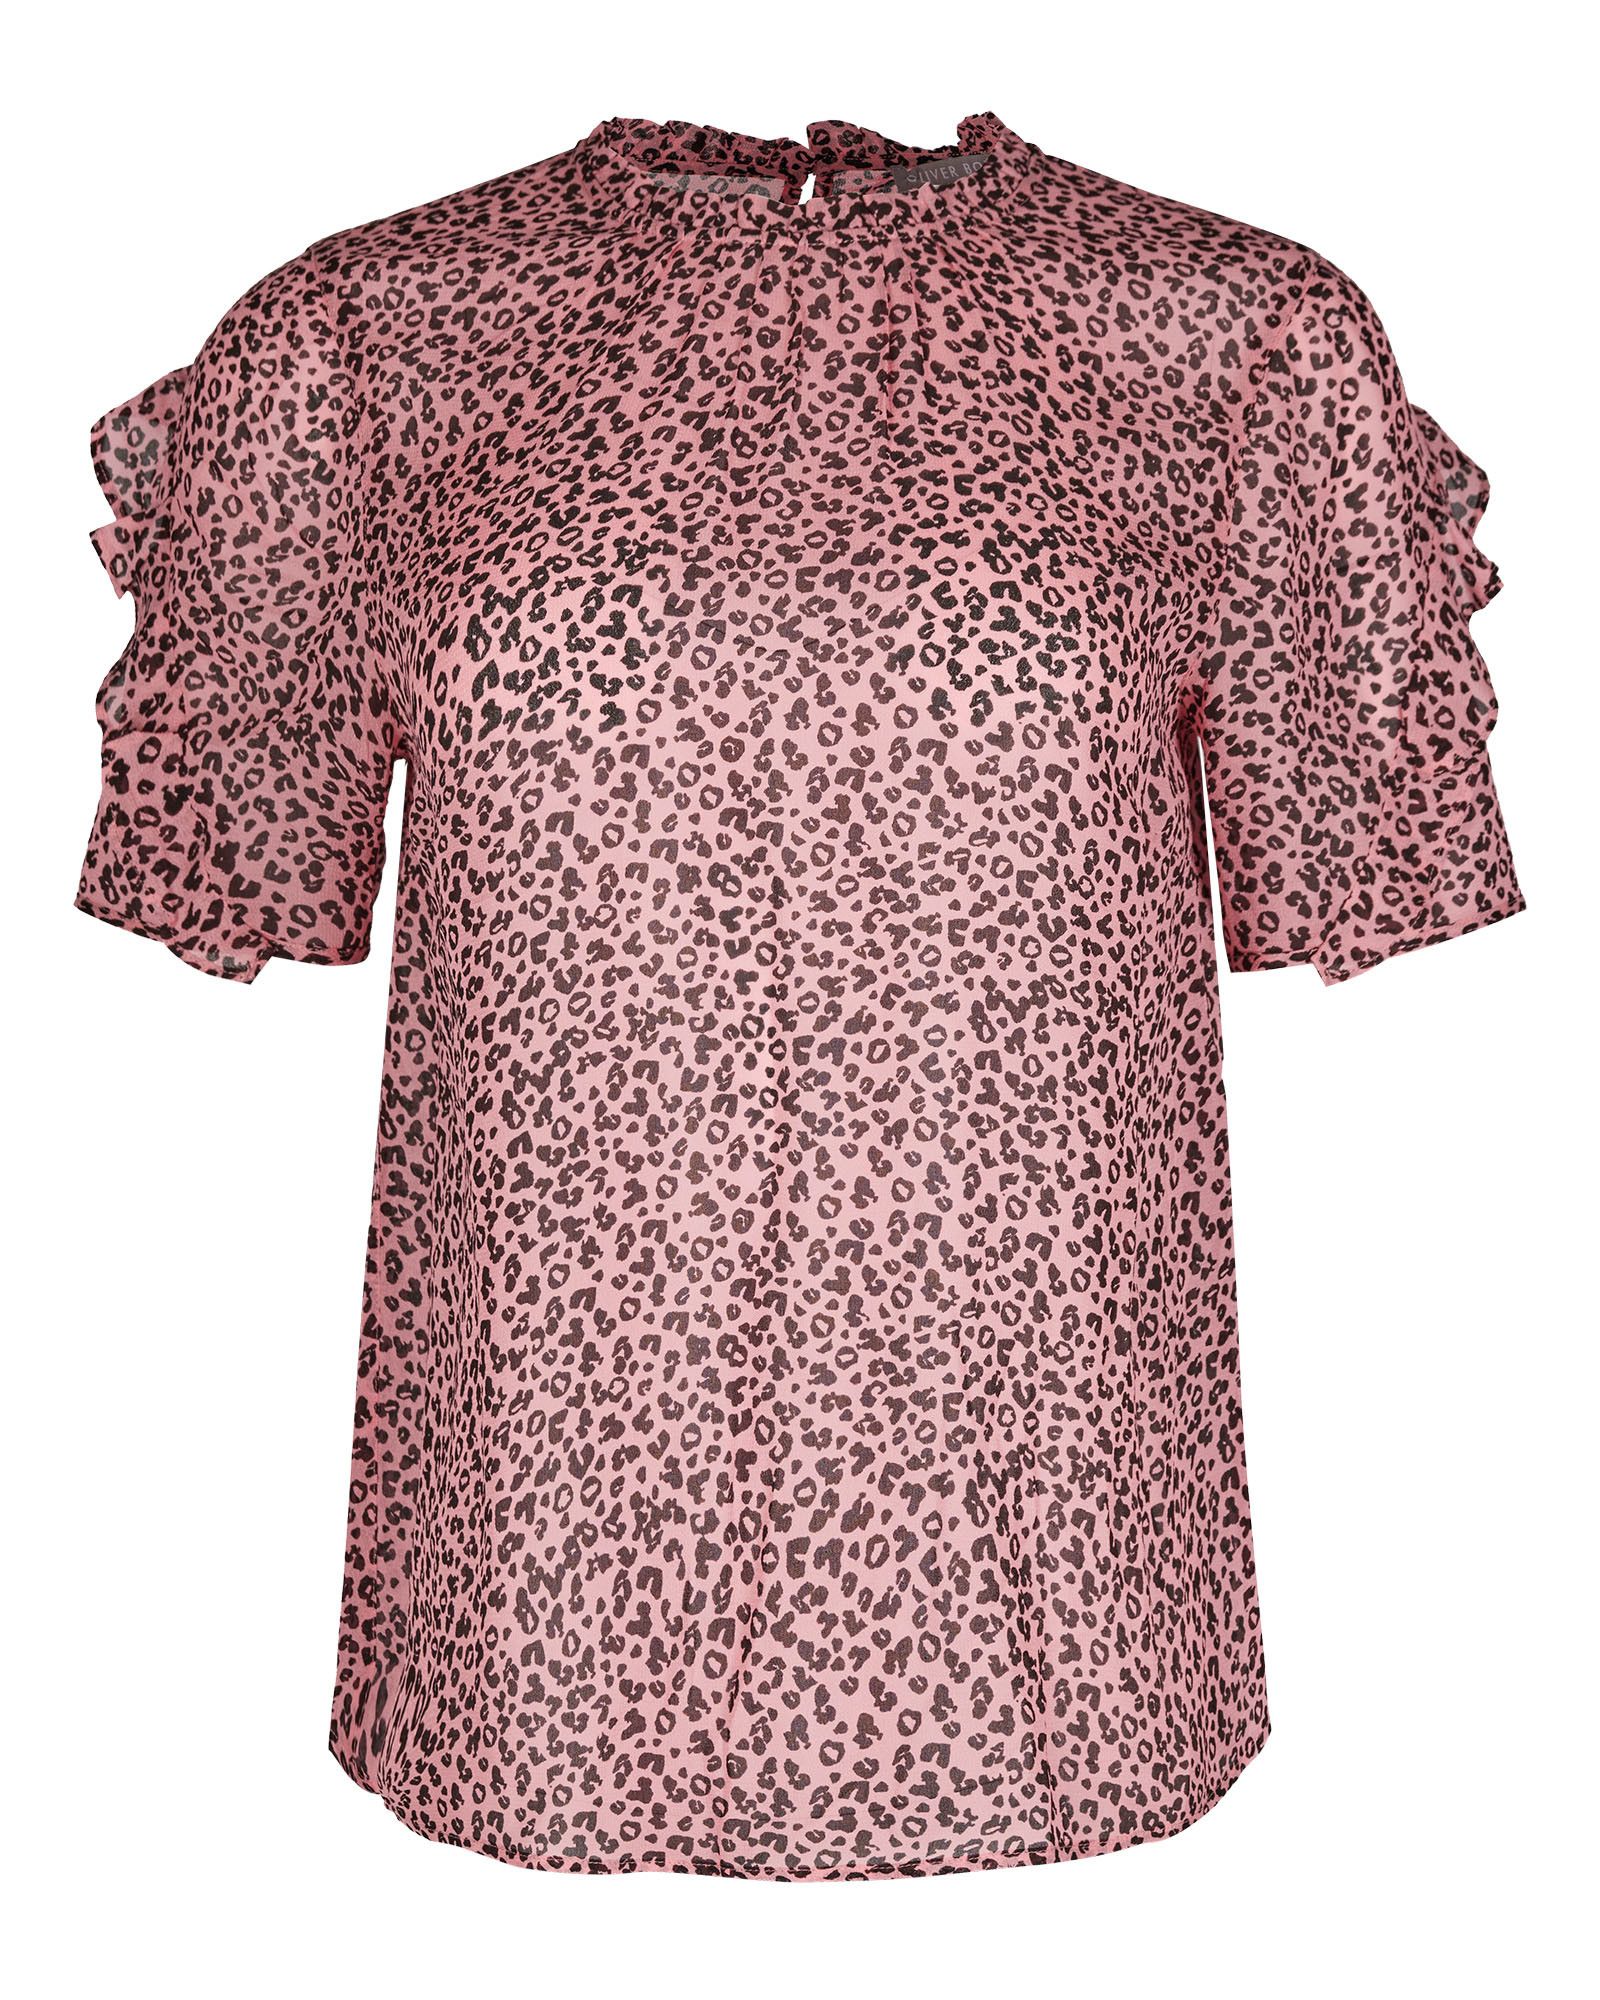 Leopard Print Pink High Neck Blouse 